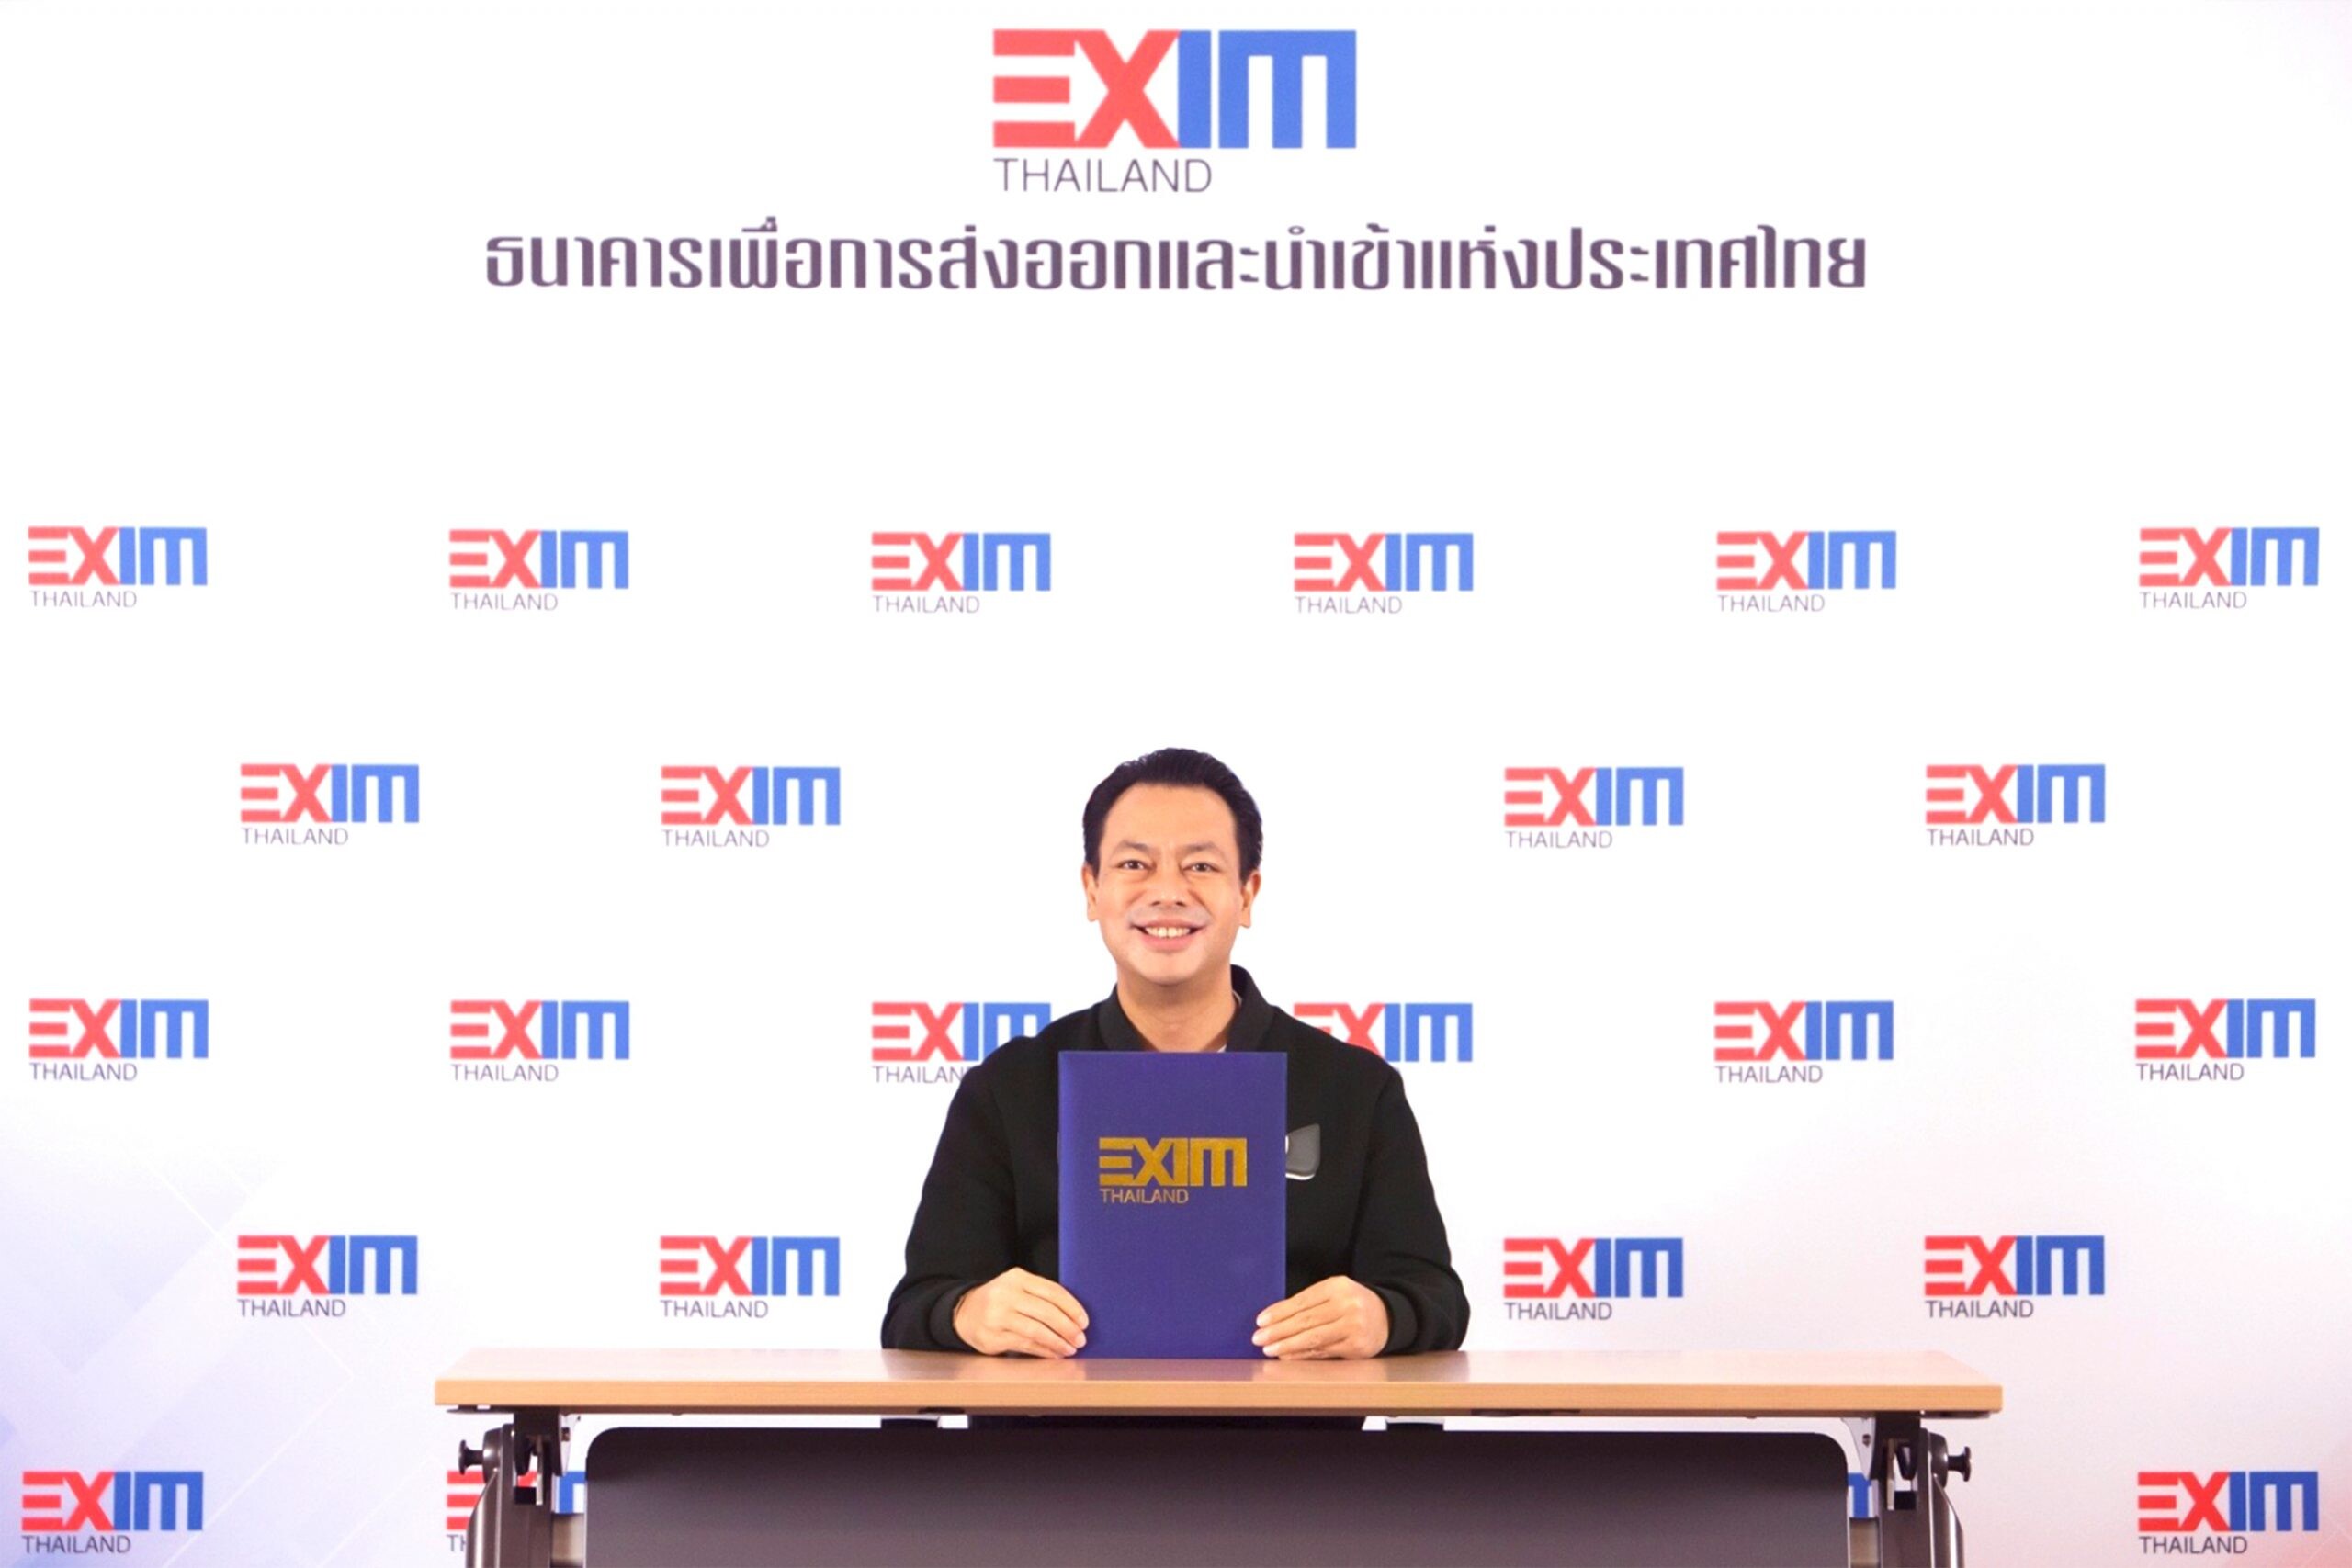 EXIM BANK จับมือ อมตะ คอร์ปอเรชัน สนับสนุนผู้ส่งออกและนักลงทุนไทย เชื่อมโยงการลงทุนทั้งในและต่างประเทศ โดยเฉพาะใน CLMV